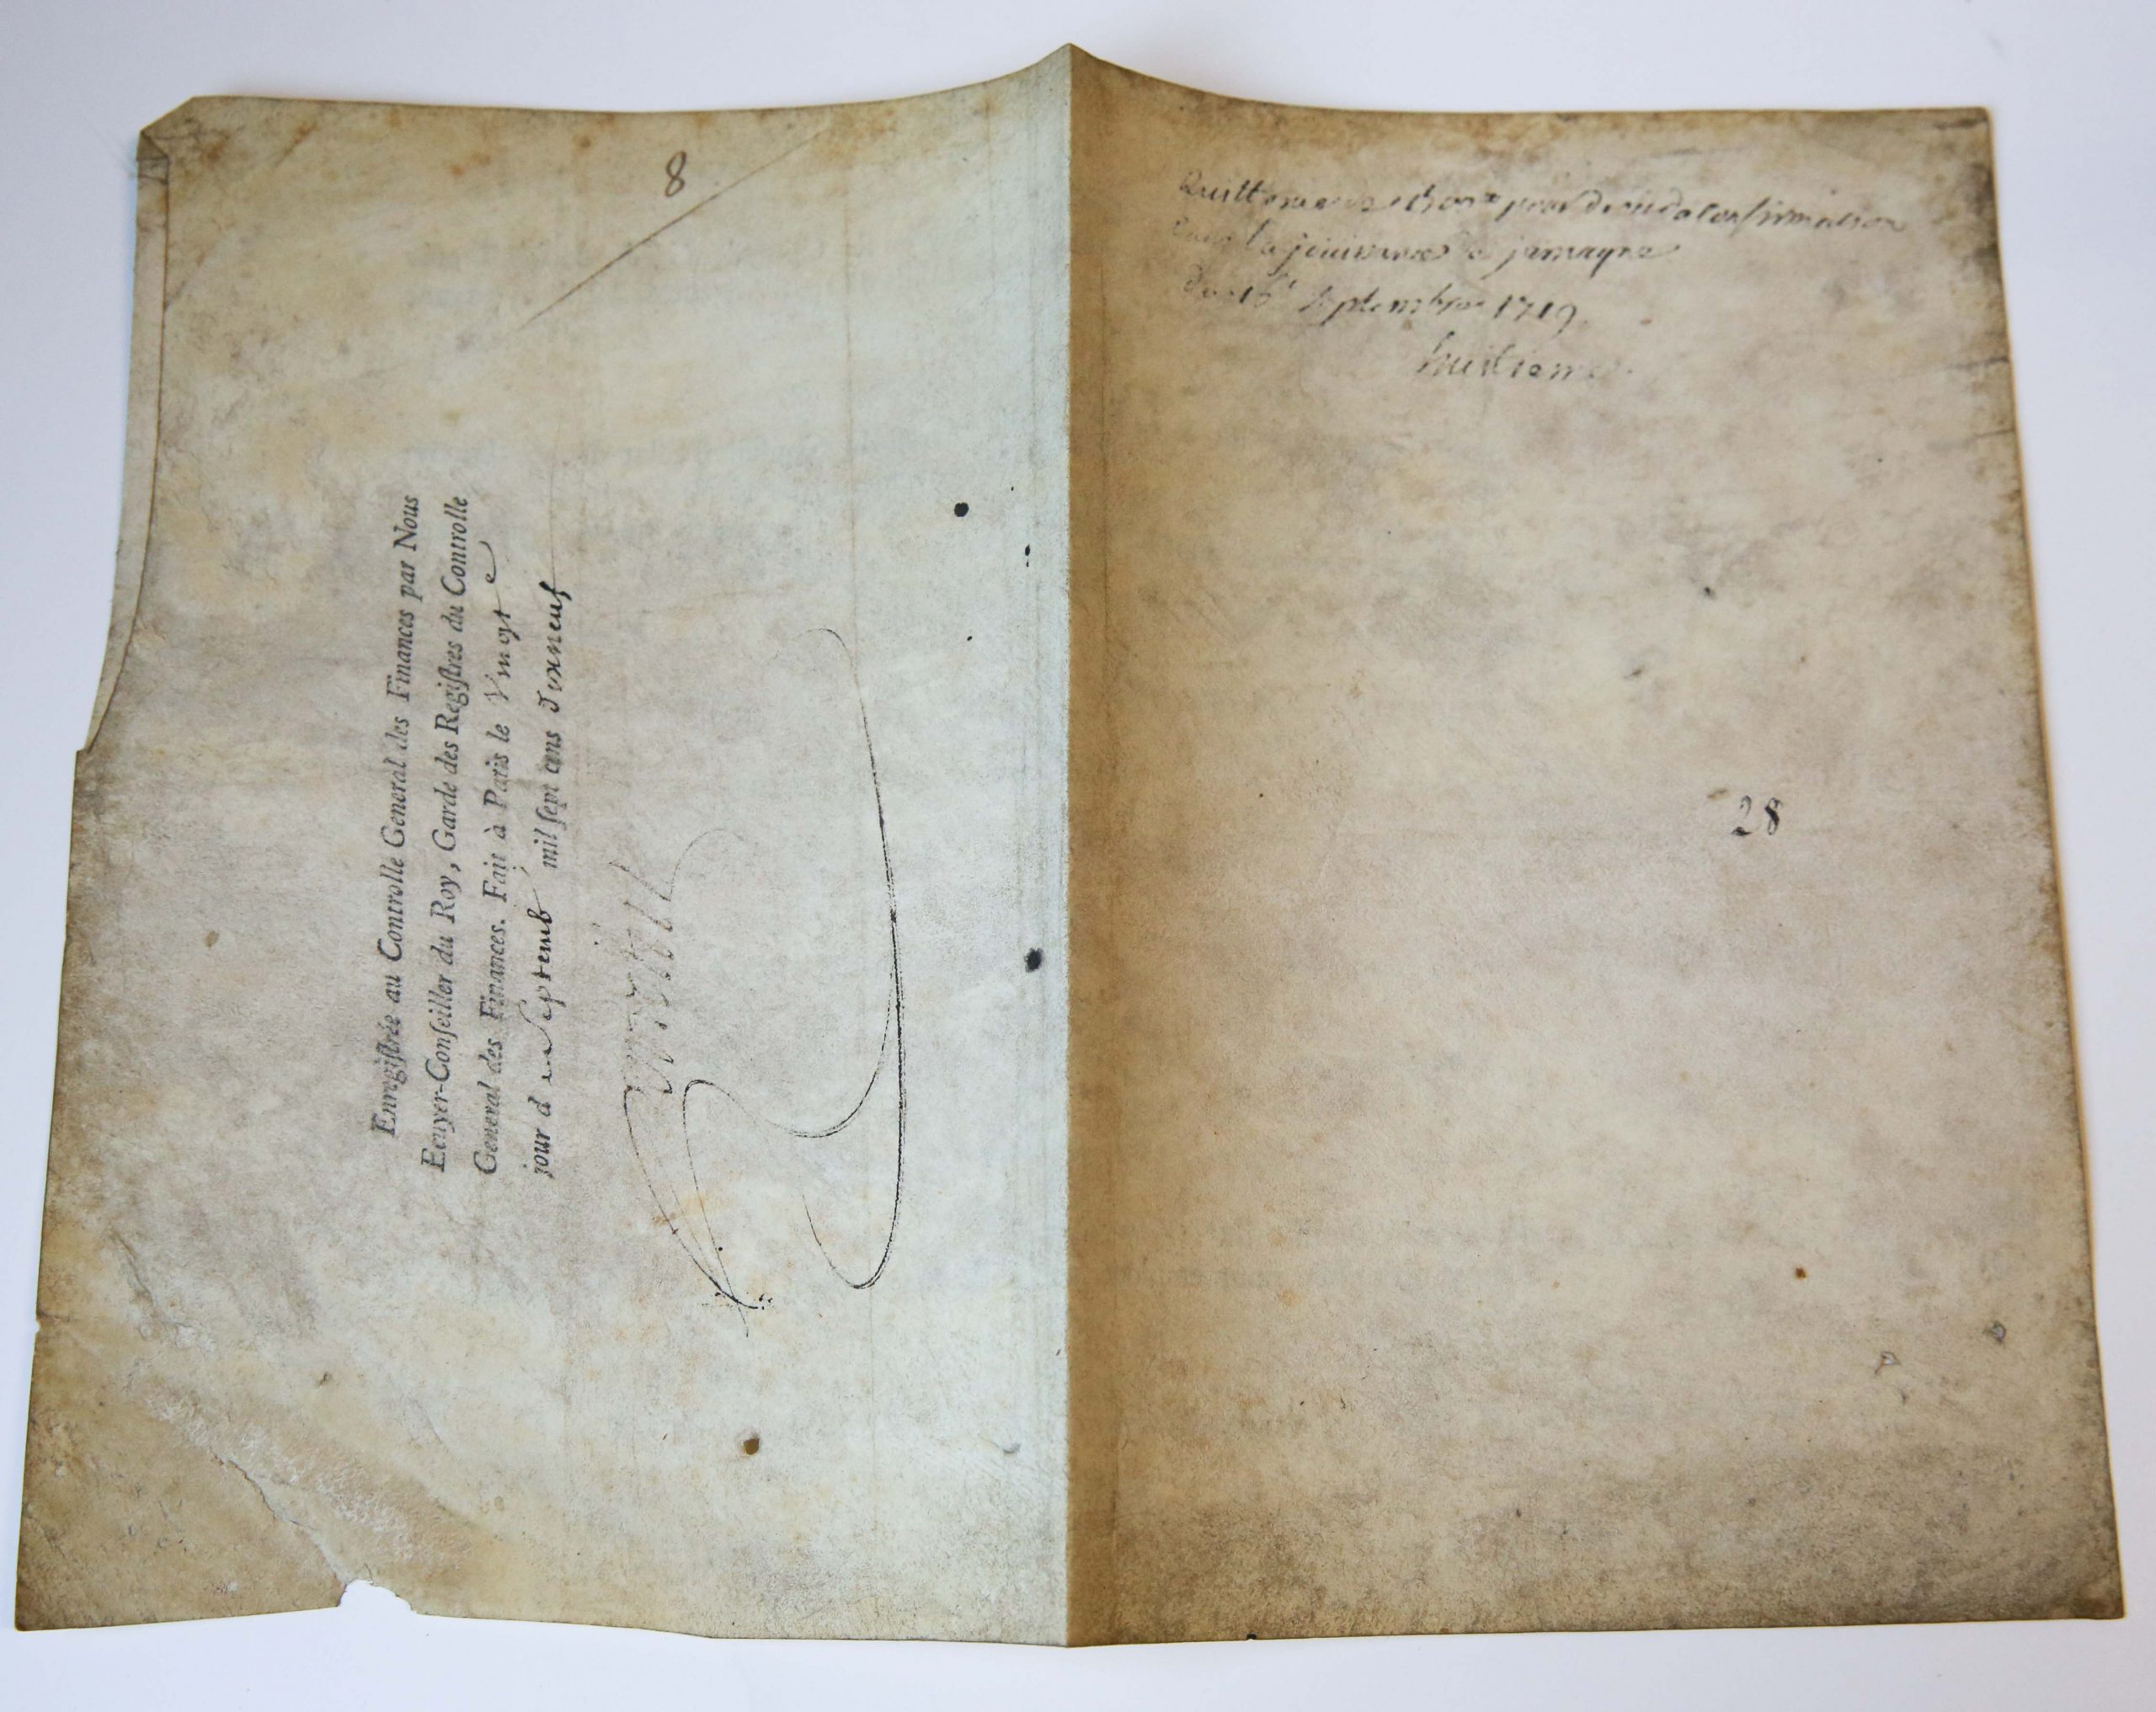 JAMAICA; GAUTEUX --- Twee kwitanties d.d. Parijs 1733 en 1769 t.n.v. Pierre Gauteux de Coudray, proprietaire de la Cense et seigneurie de Jamaique. Deels gedrukt, op perkament.